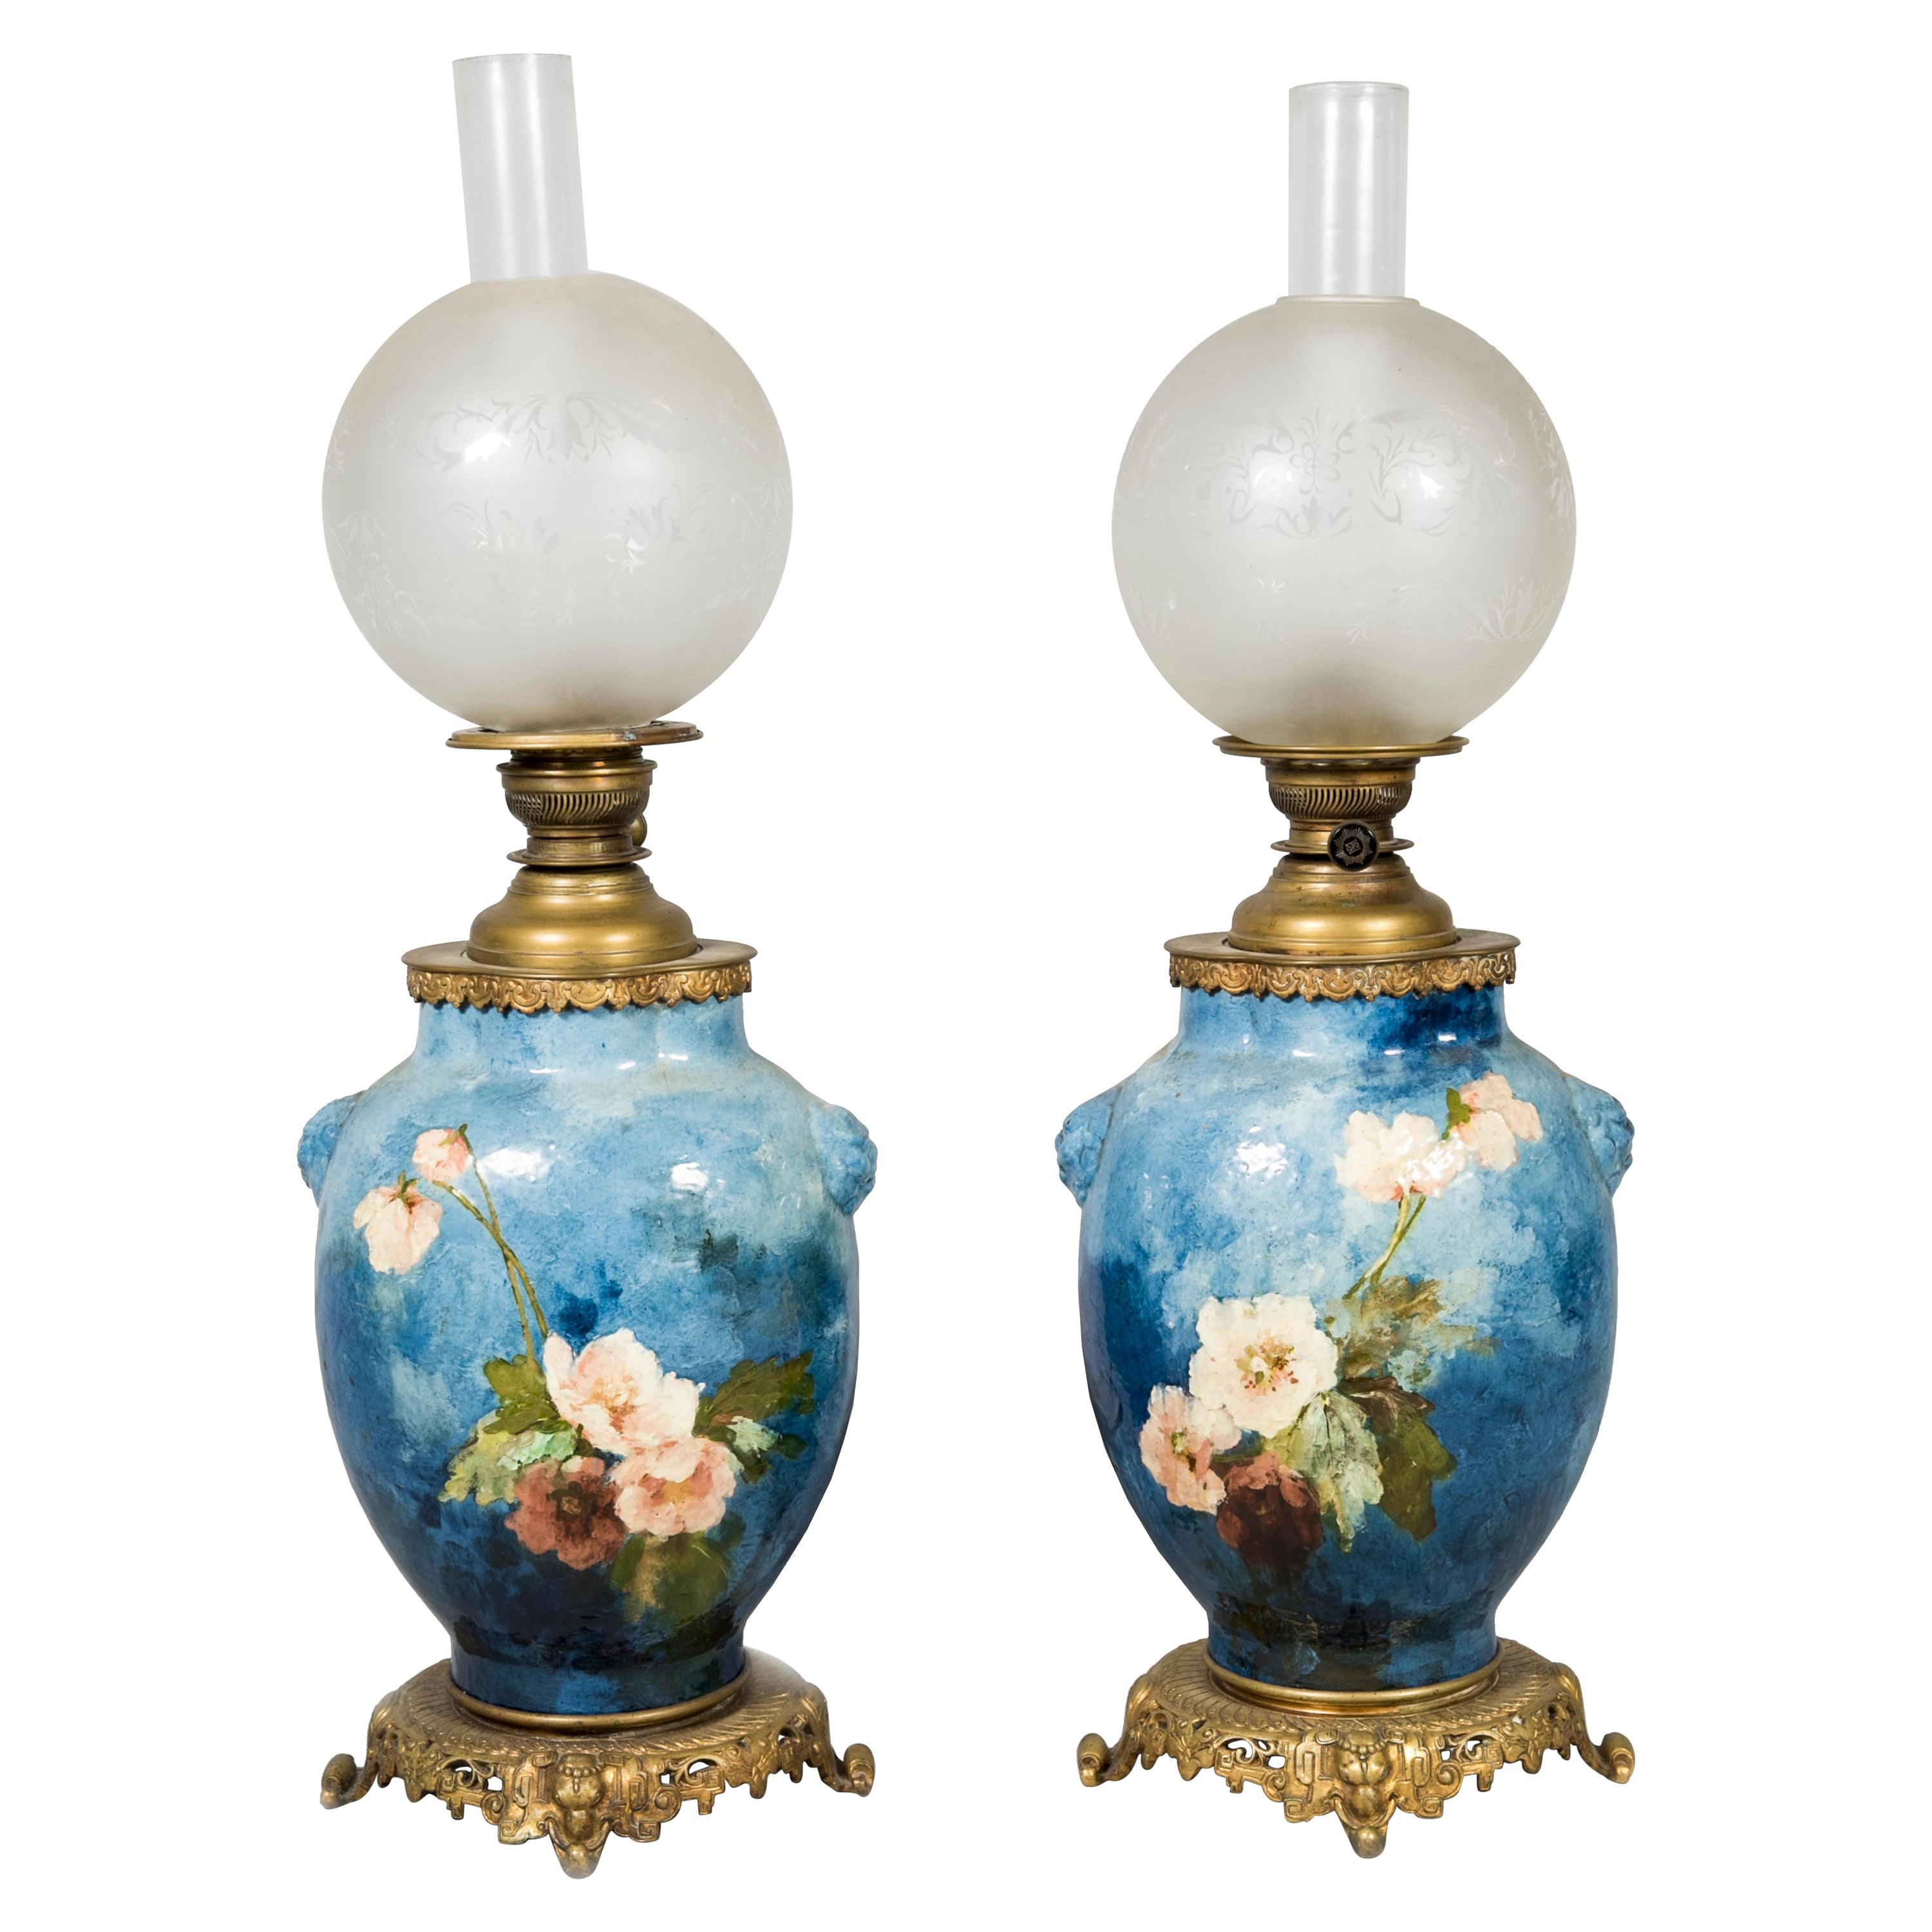 Pair of XIX Century Ceramic Lamps by Haviland